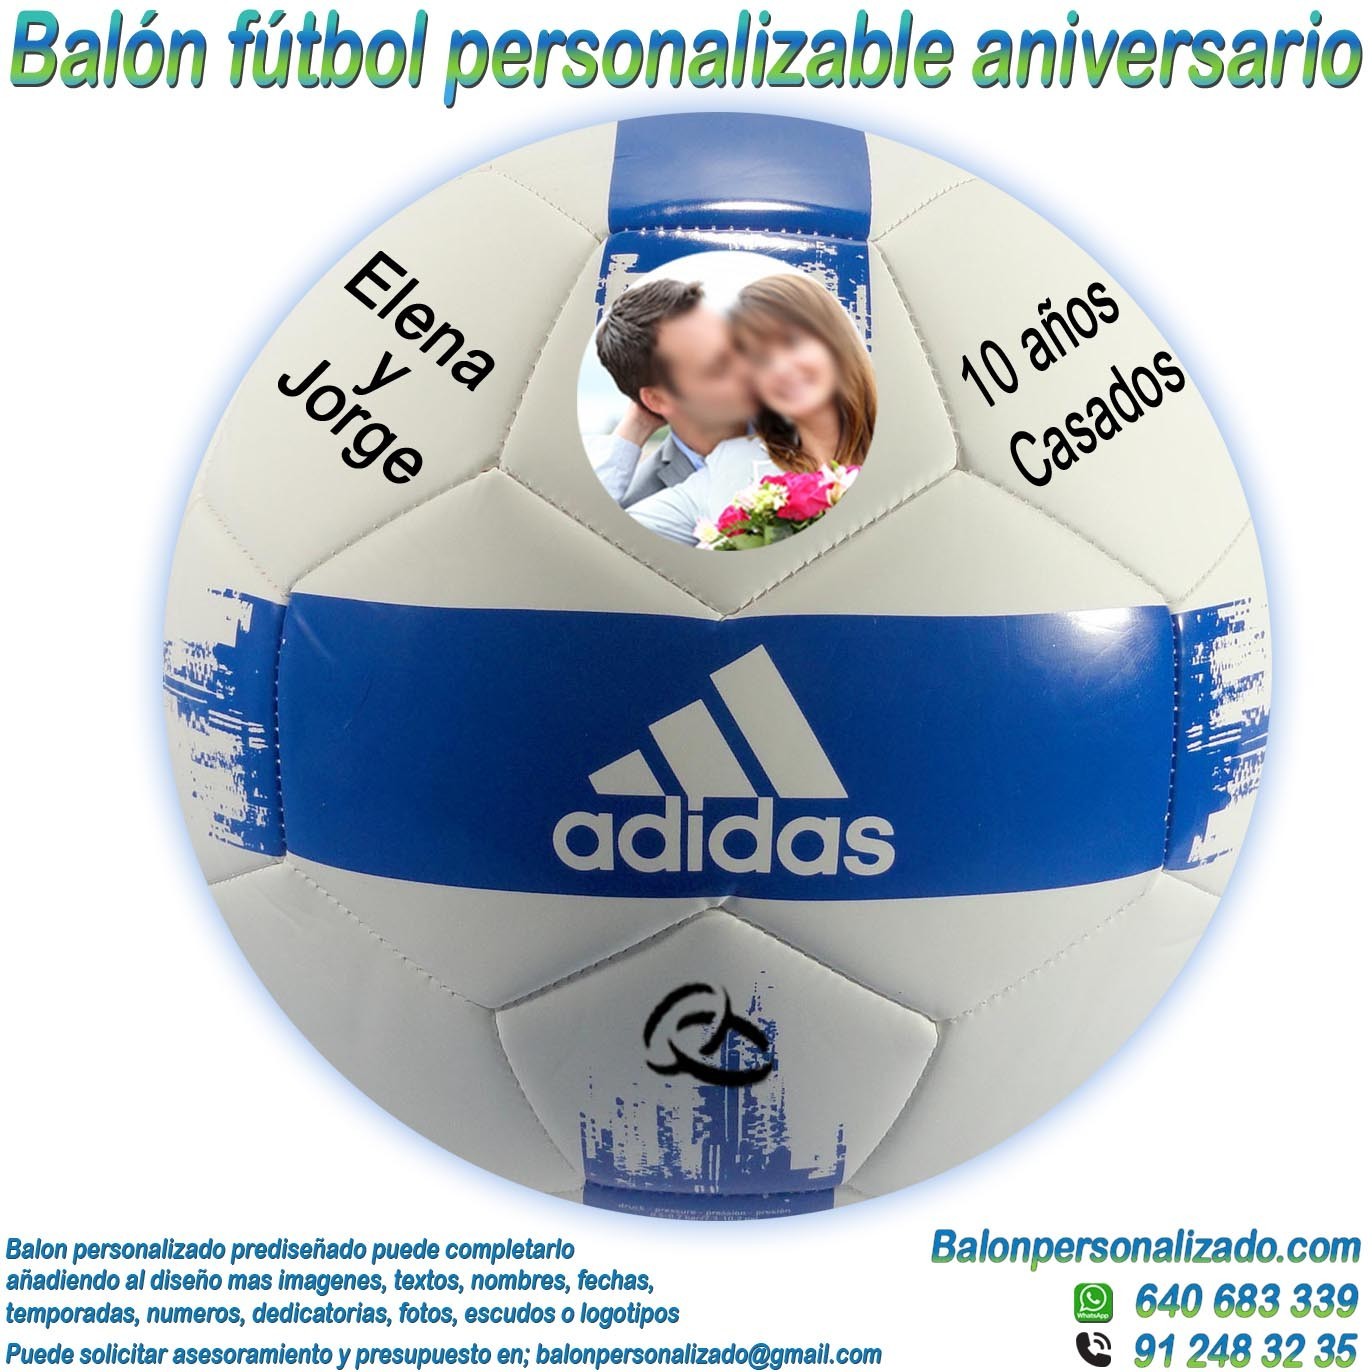 http://balonpersonalizado.com/171-superlarge_default/balon-futbol-personalizable-aniversario-foto-texto-imagen-dedicatoria-escudo-adidas-EPP2.jpg